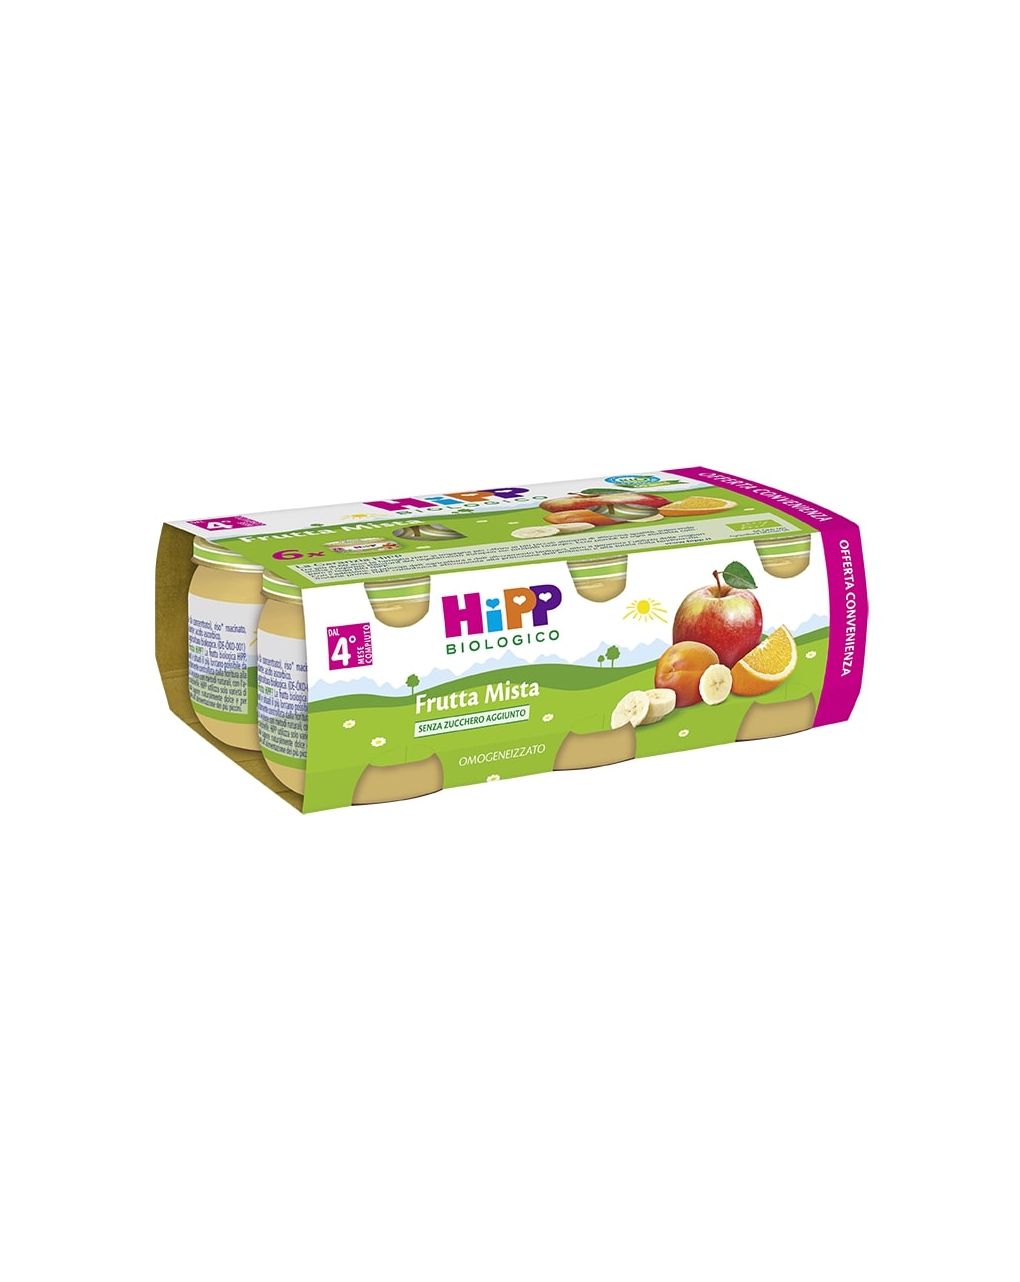 Hipp - omogeneizzato frutta mista 100% 6x80g - Hipp